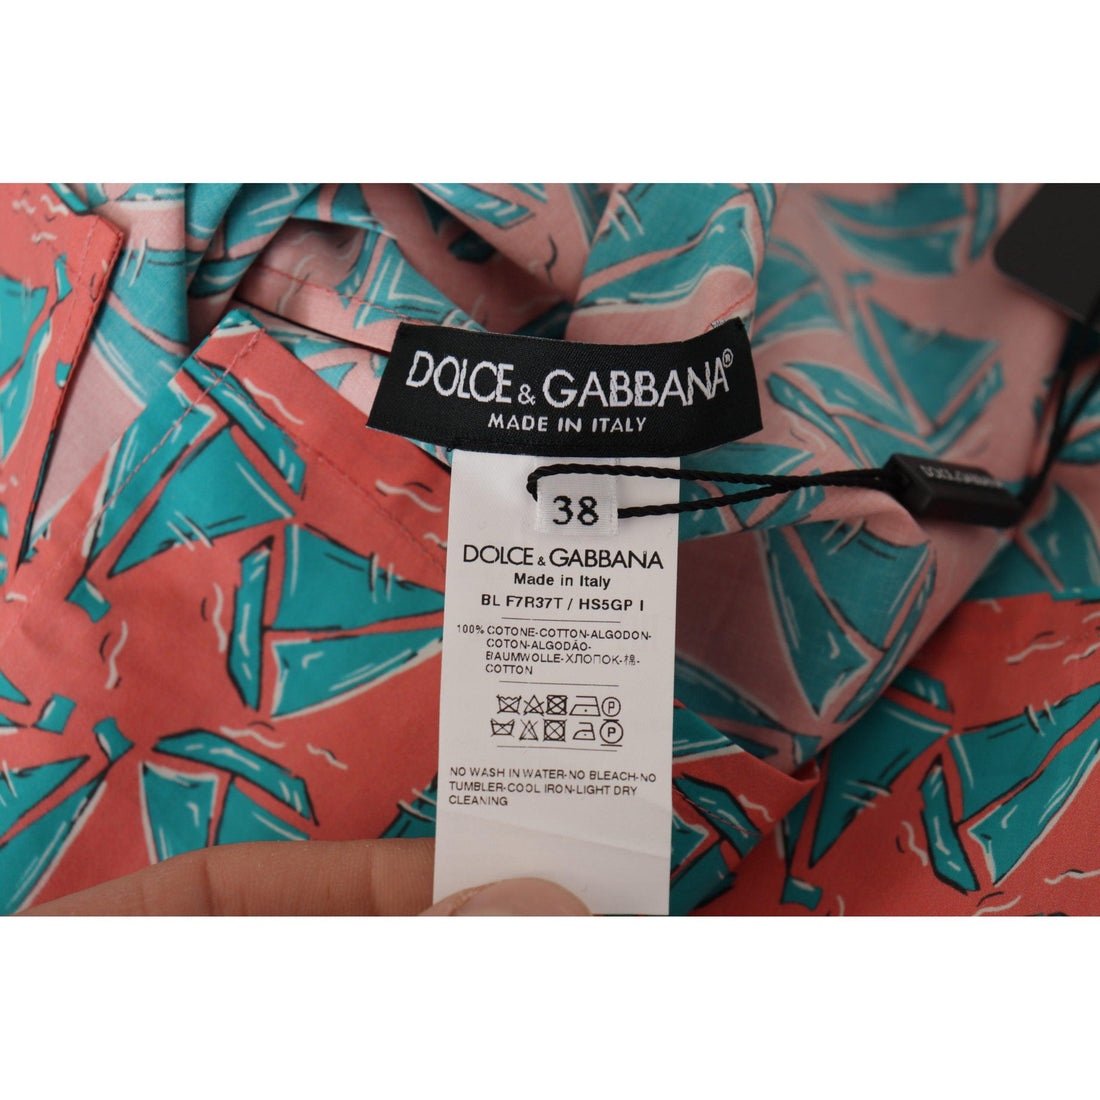 Dolce & Gabbana Chic Pink Sailboat Print Cotton Top